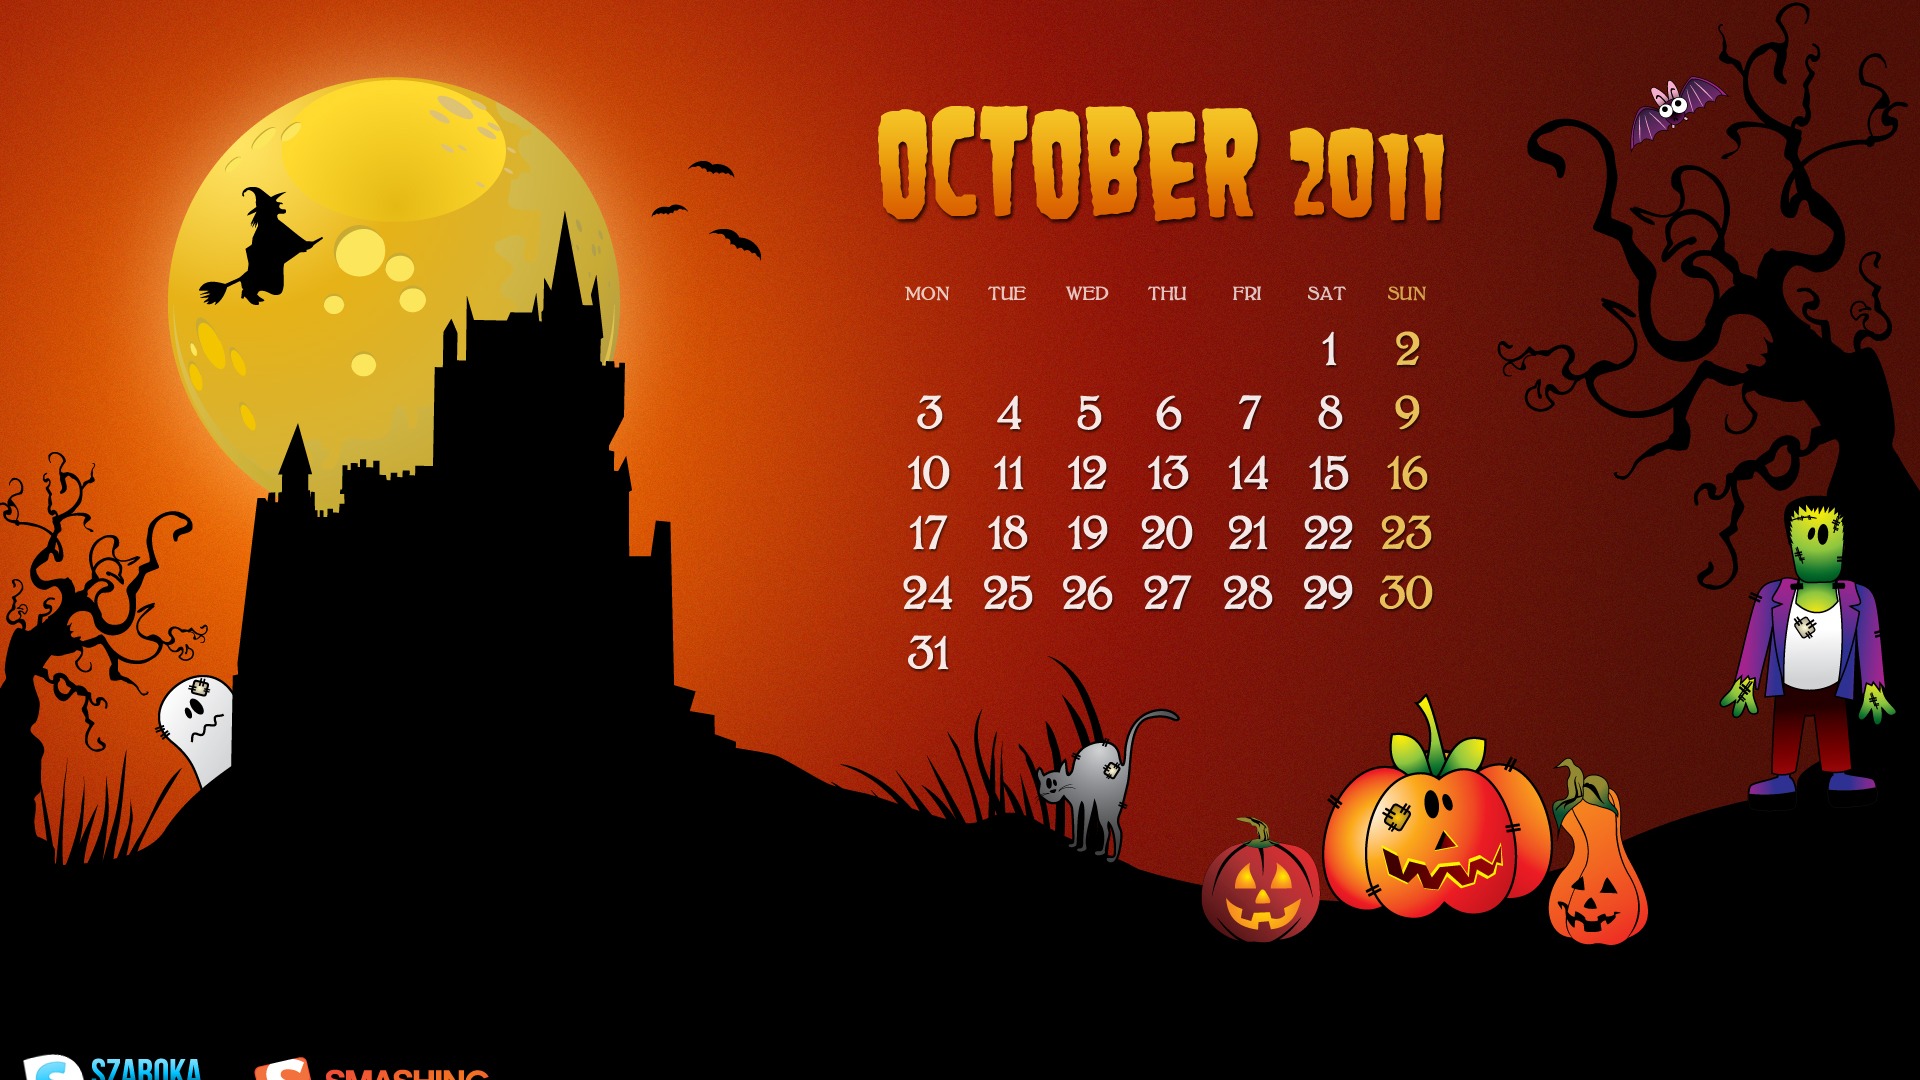 October 2011 Calendar Wallpaper (1) #1 - 1920x1080